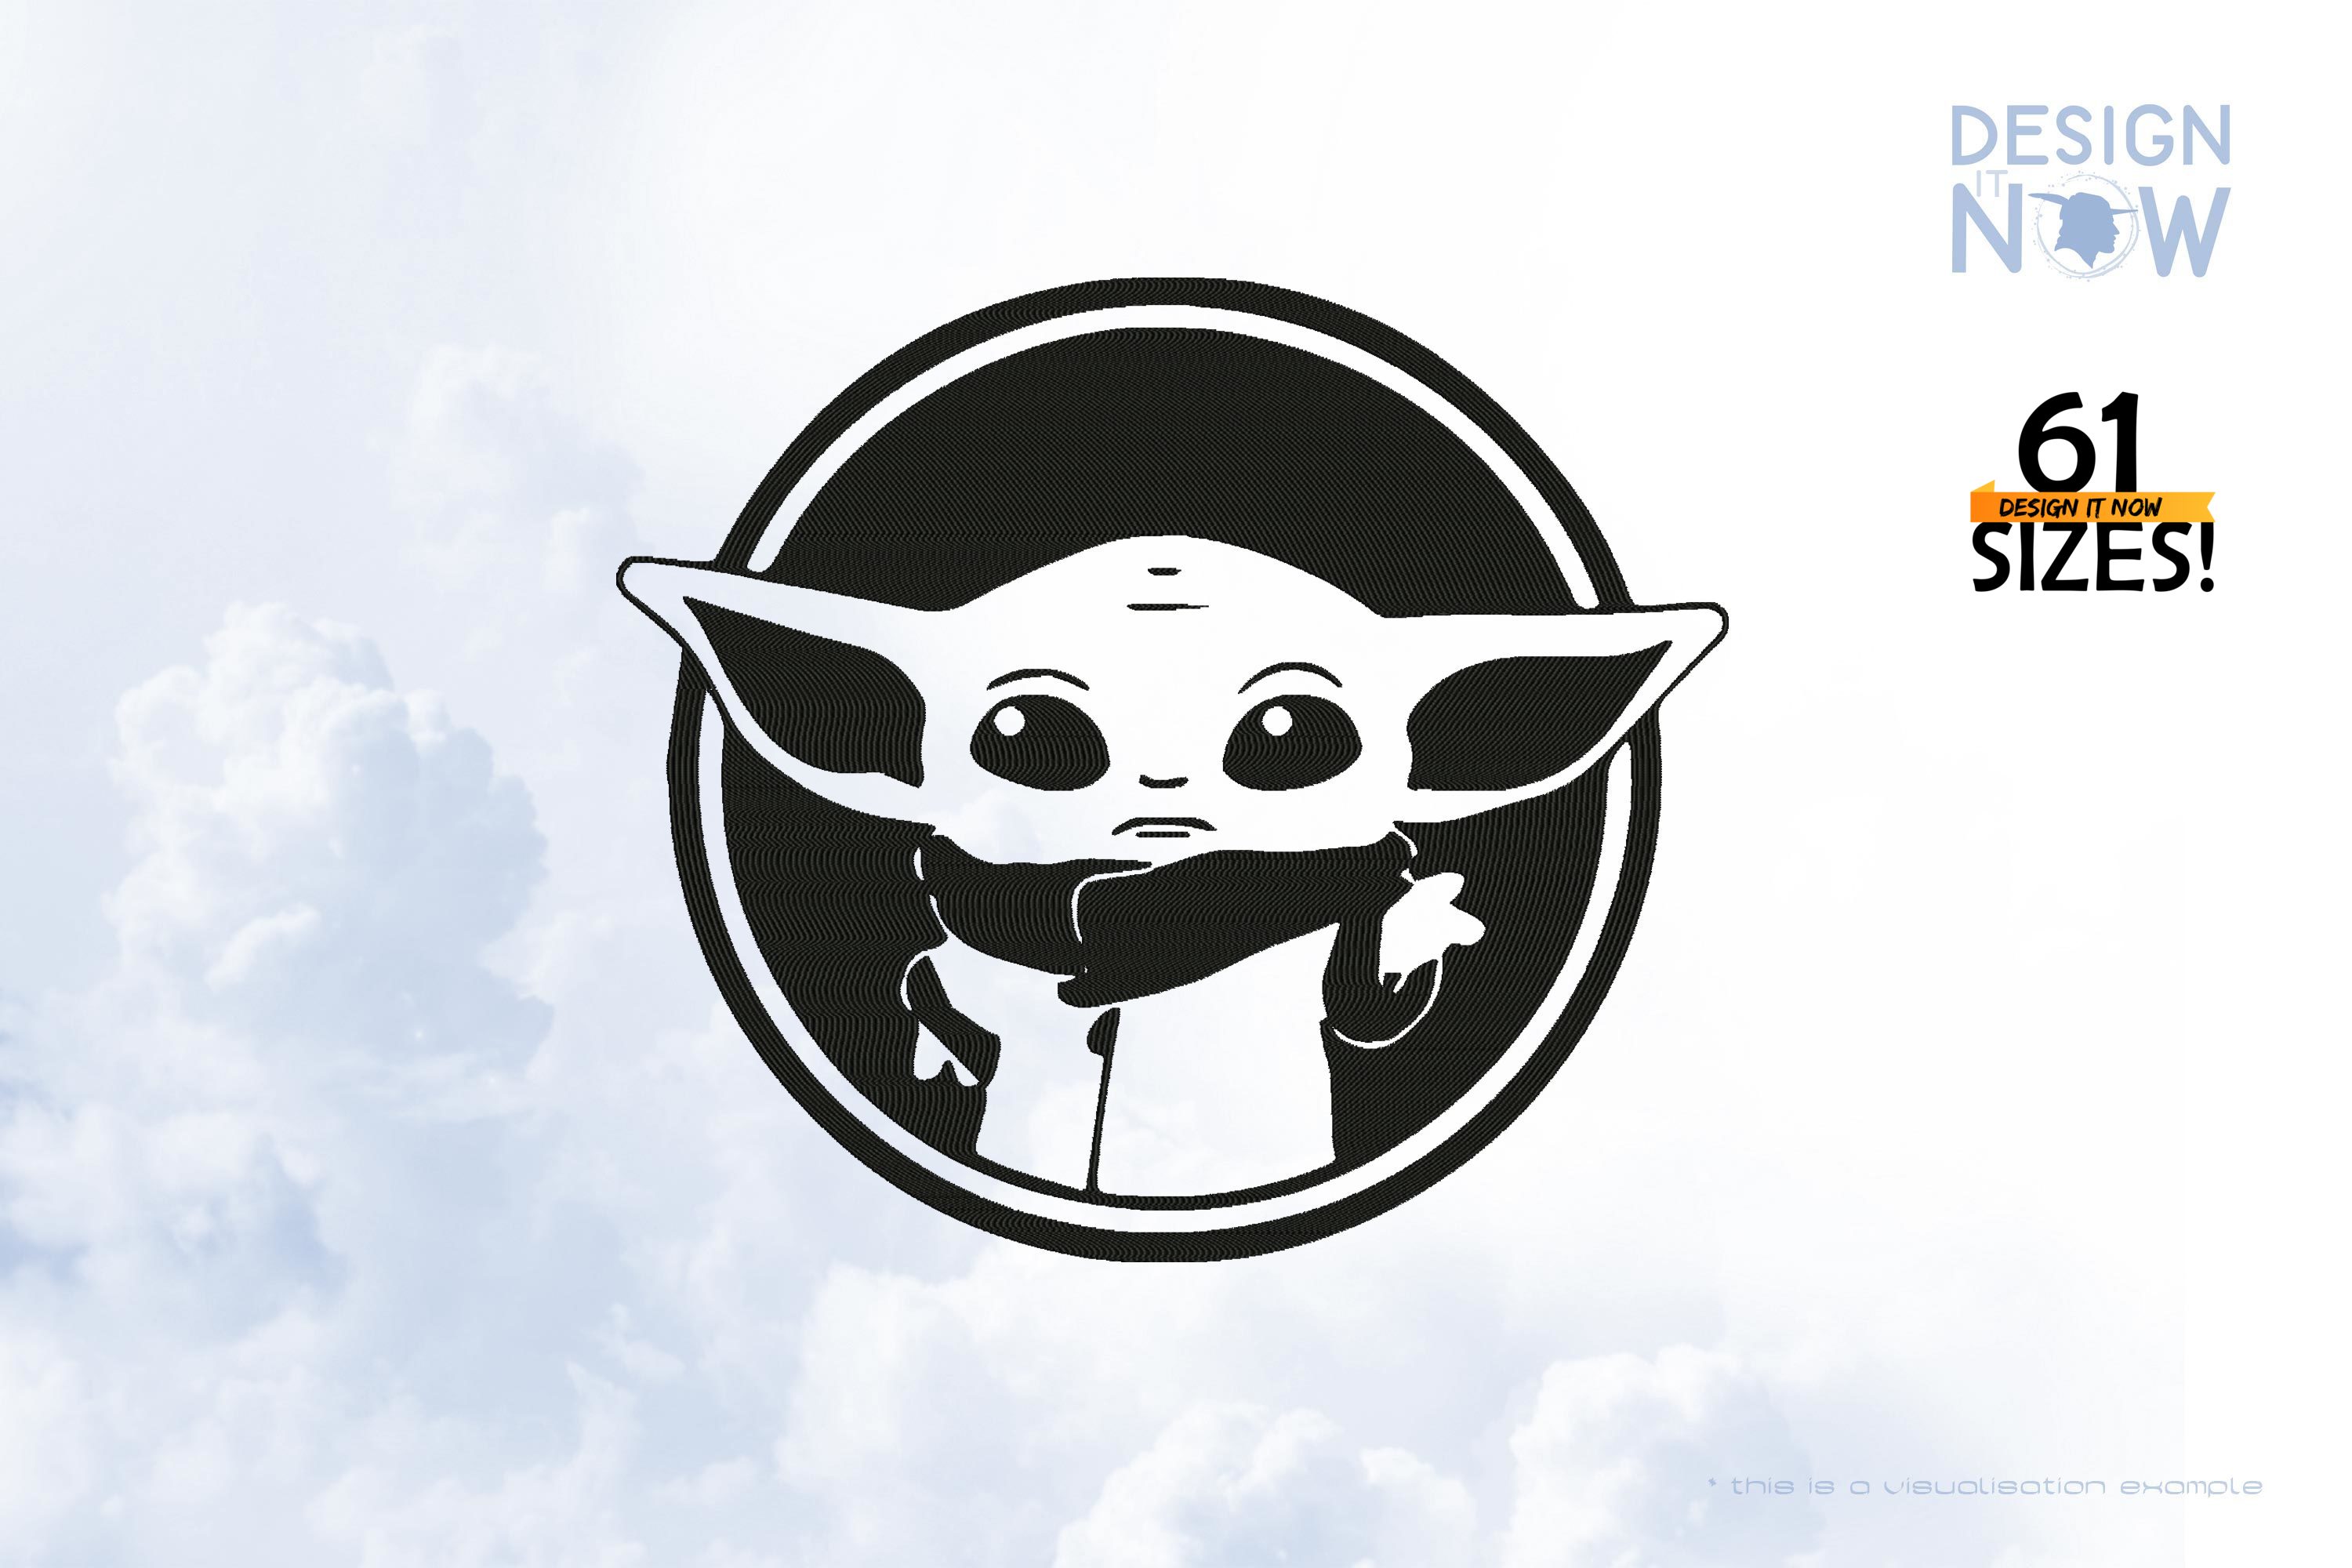 Tribute To Fictional Character Grogu aka Baby Yoda (Circular)